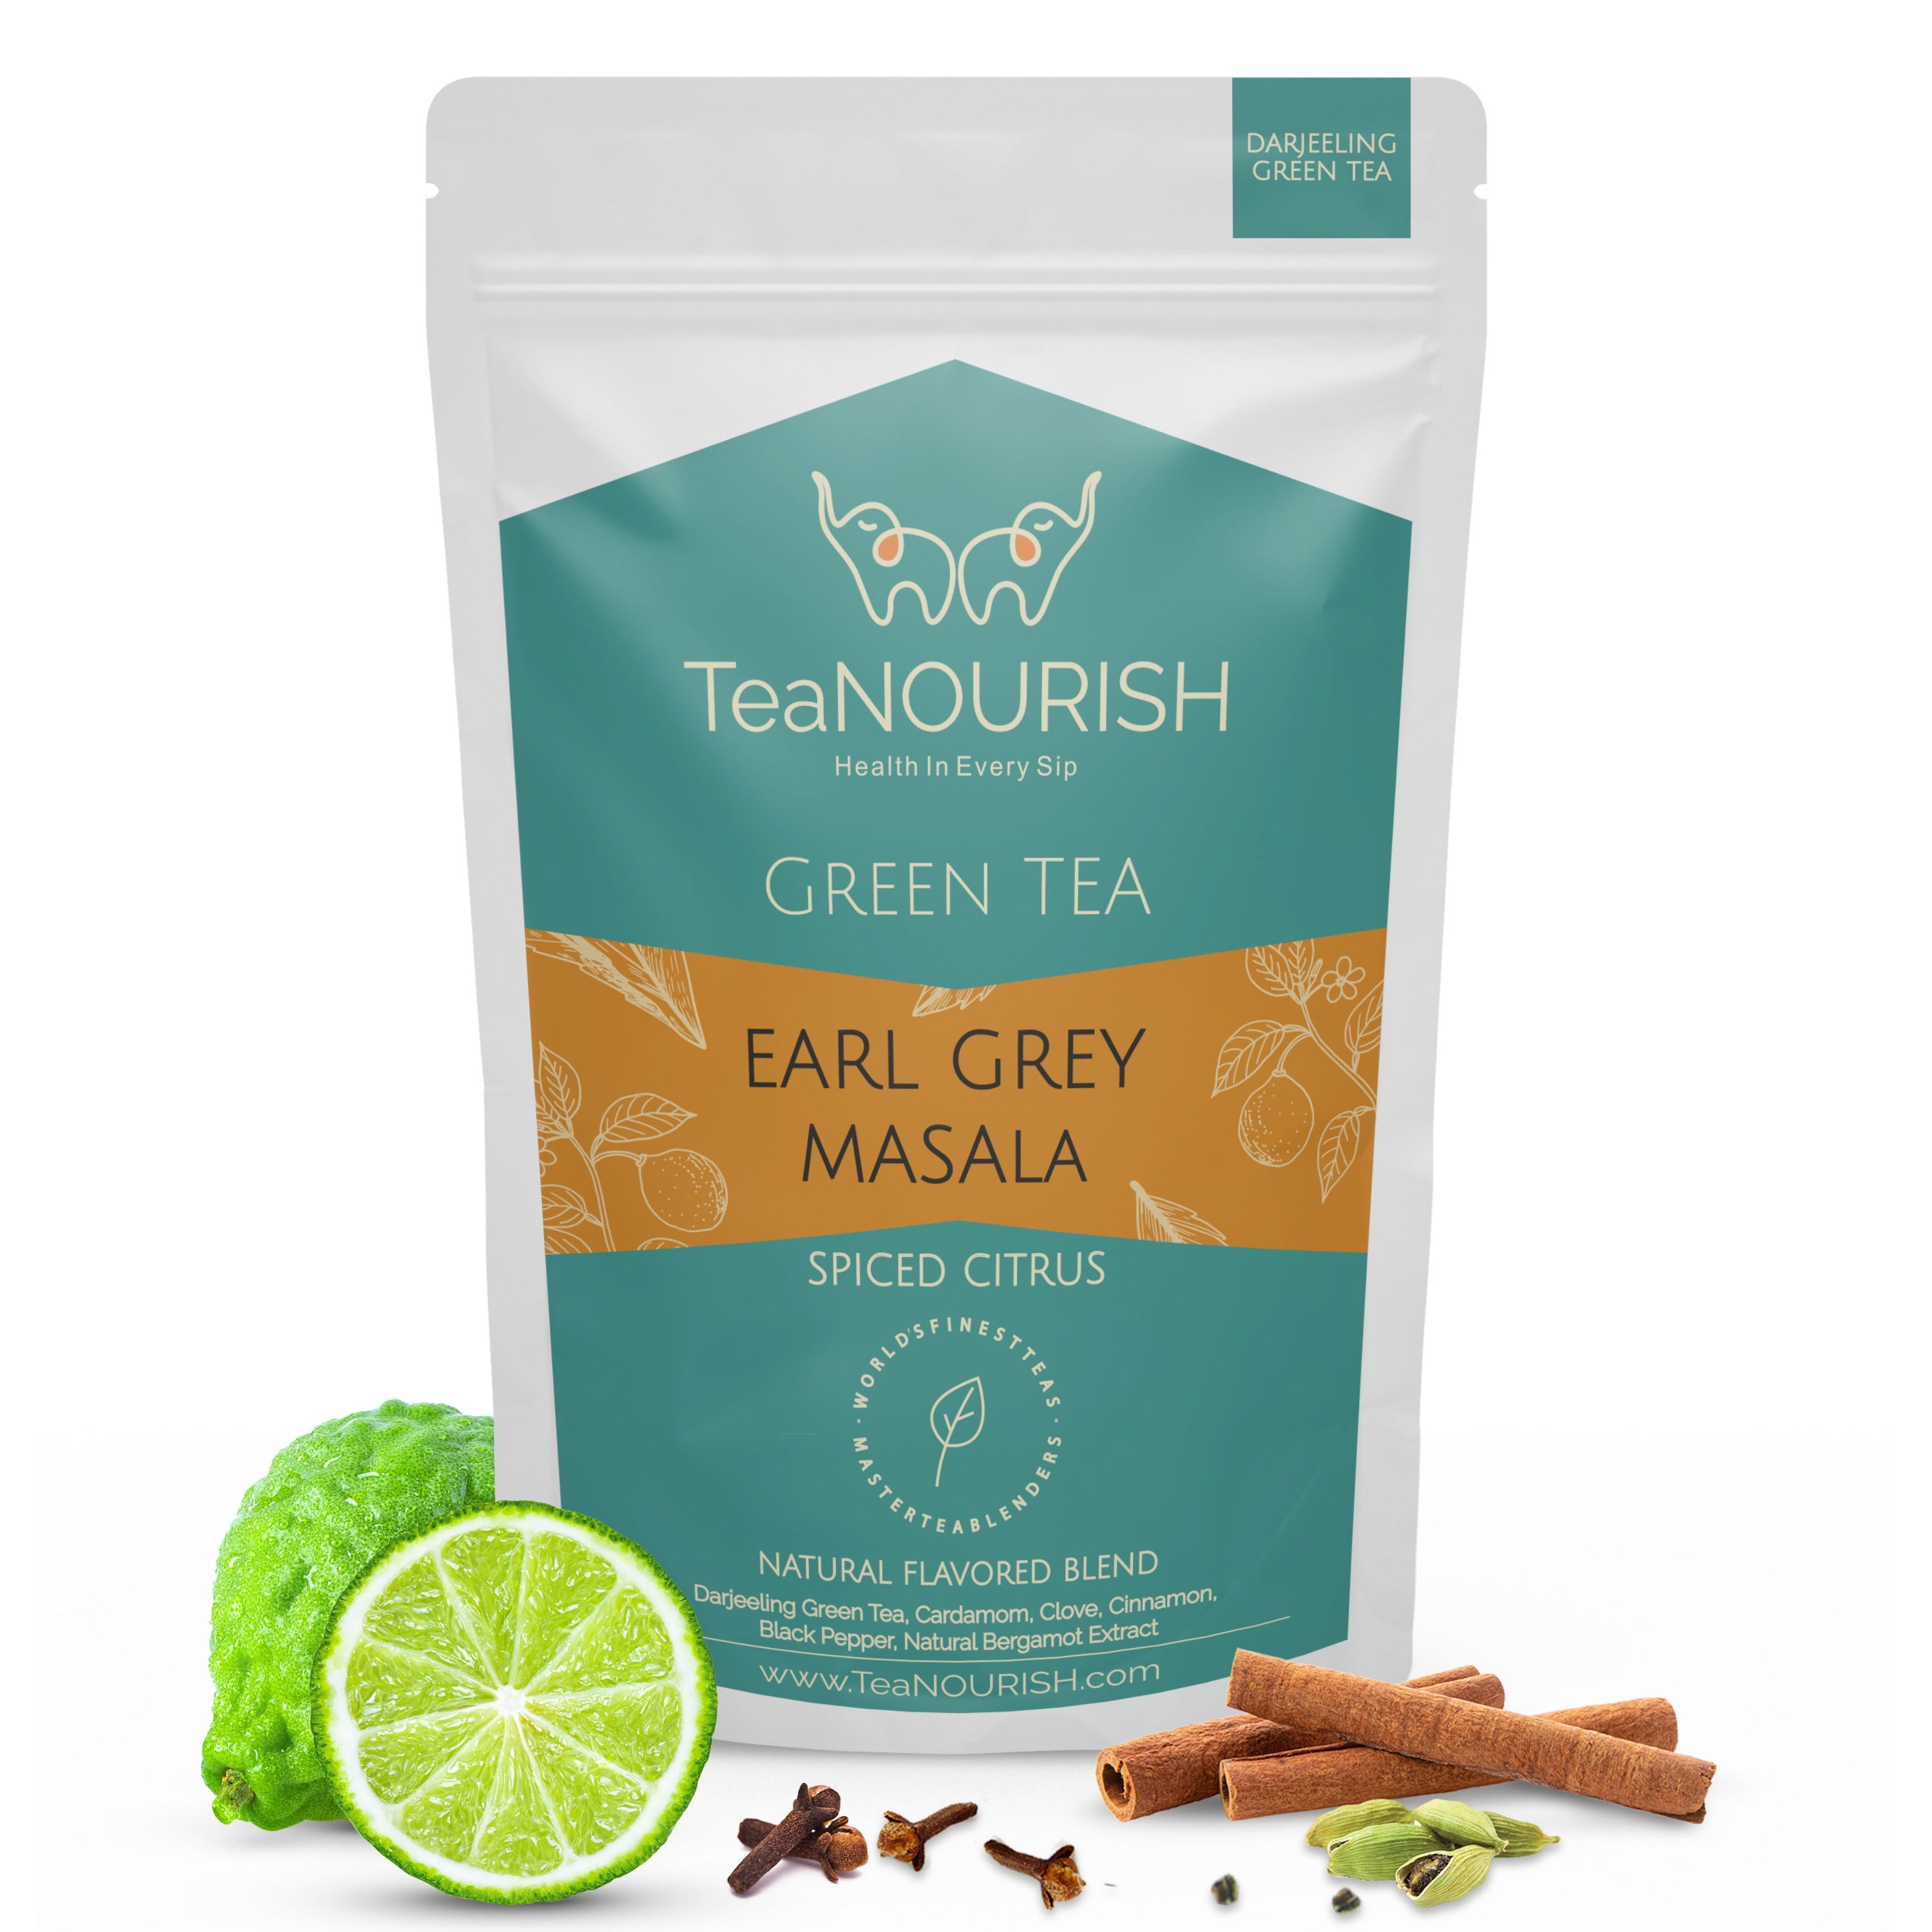 Earl Grey Masala Green Tea Product Picture